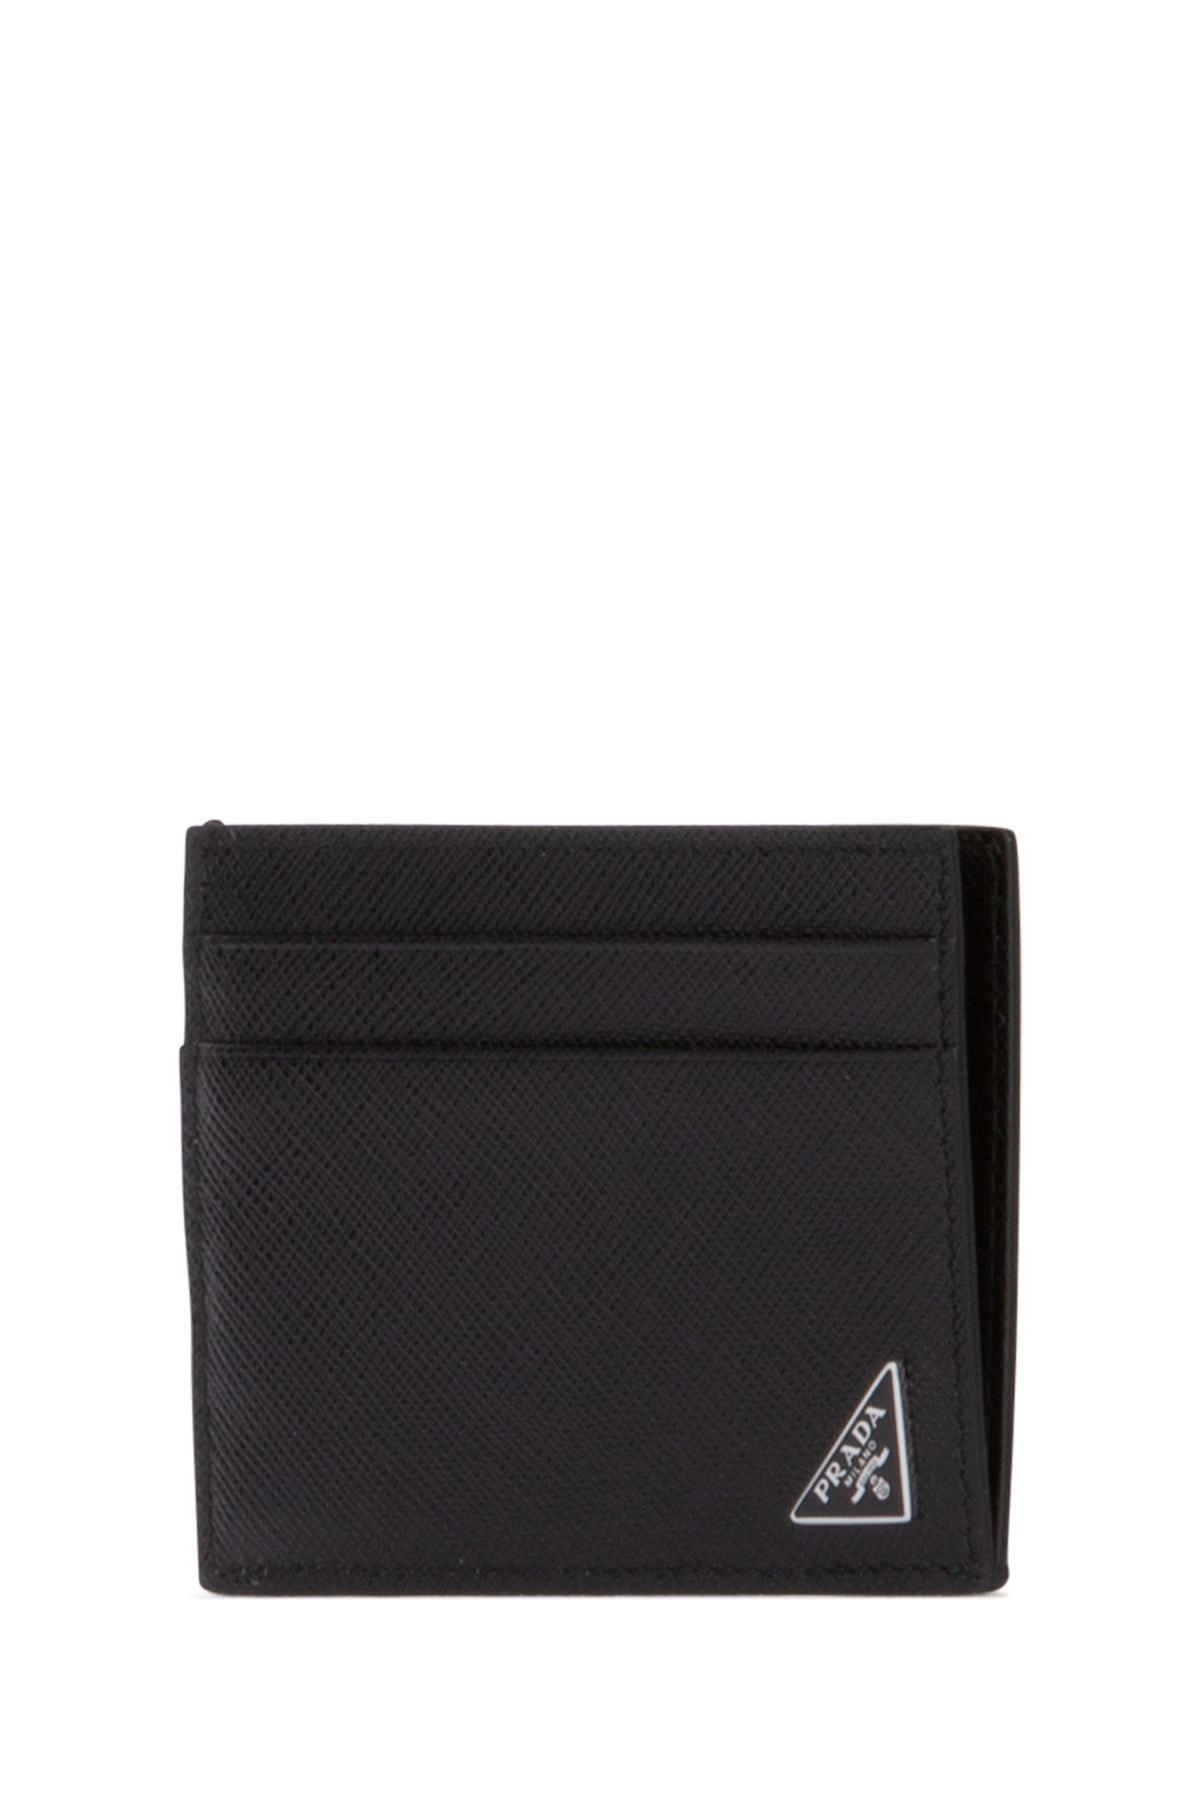 Prada Leather Saffiano Triangle Card Case With Money Clip in Black 